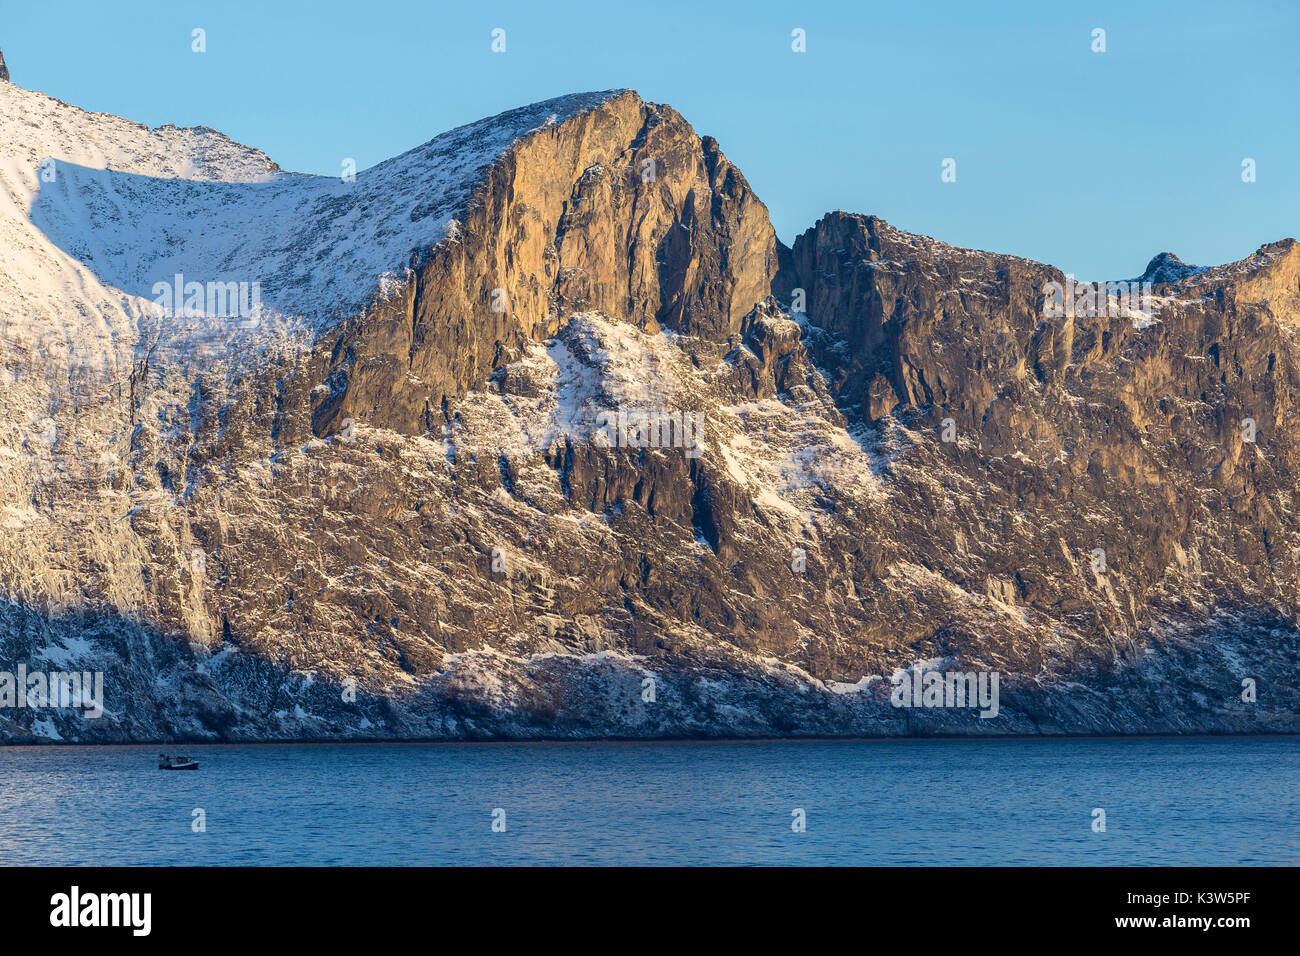 Barco de pesca de velas en Mefjorden con imponentes paredes de roca detrás de él. Mefjordvaer, Mefjorden, Senja, Noruega, Europa. Foto de stock